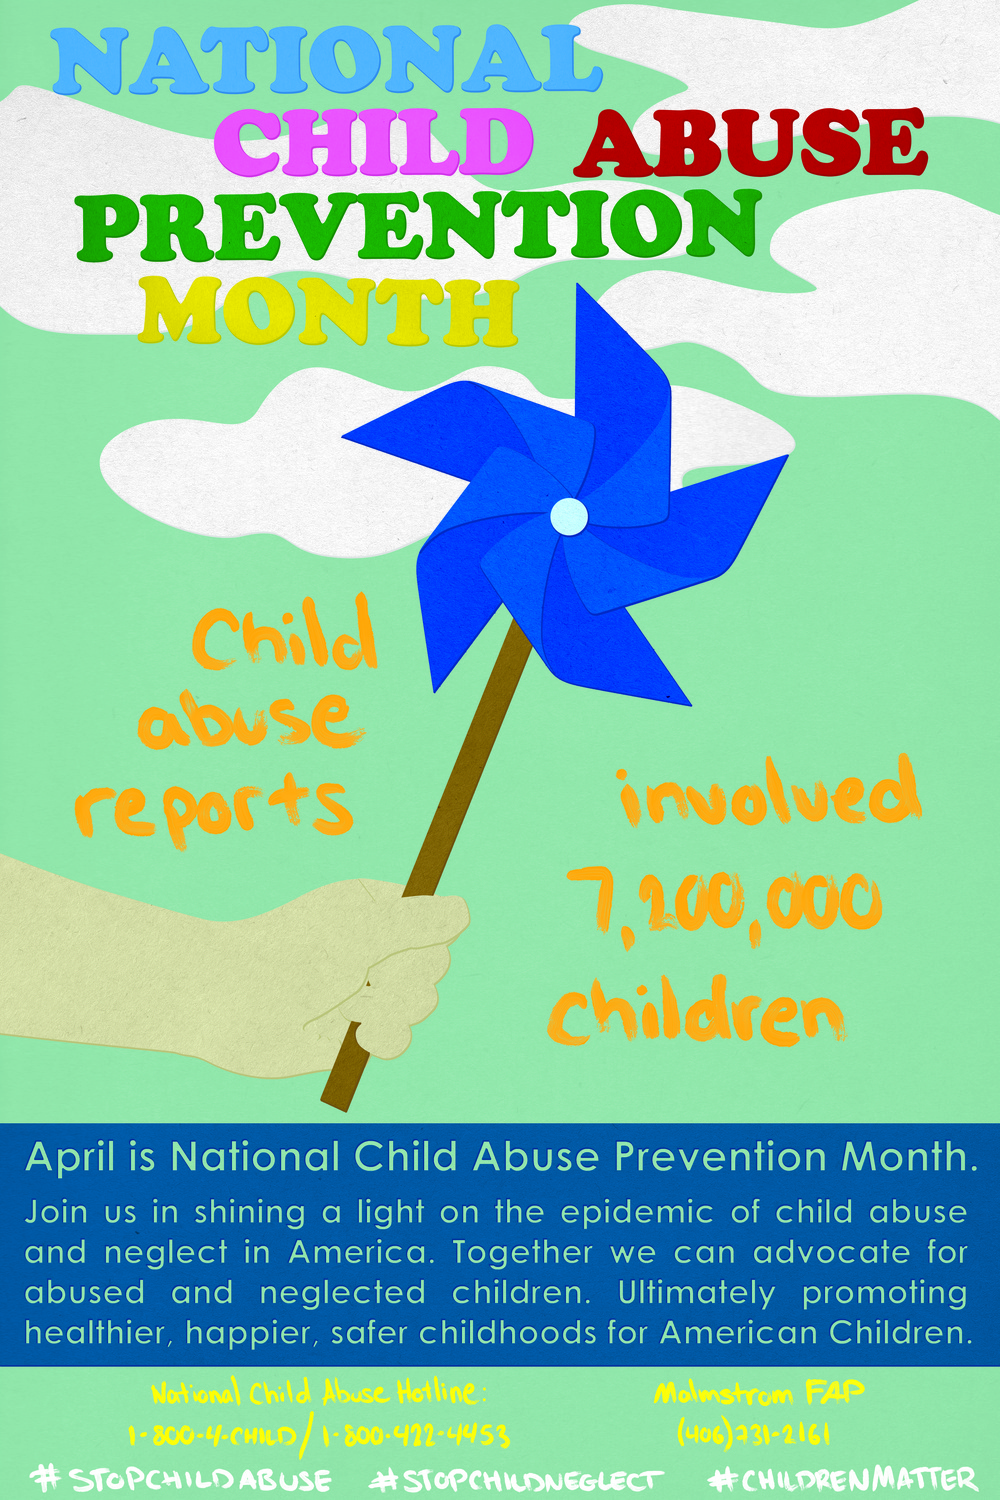 Awareness of Child Abuse